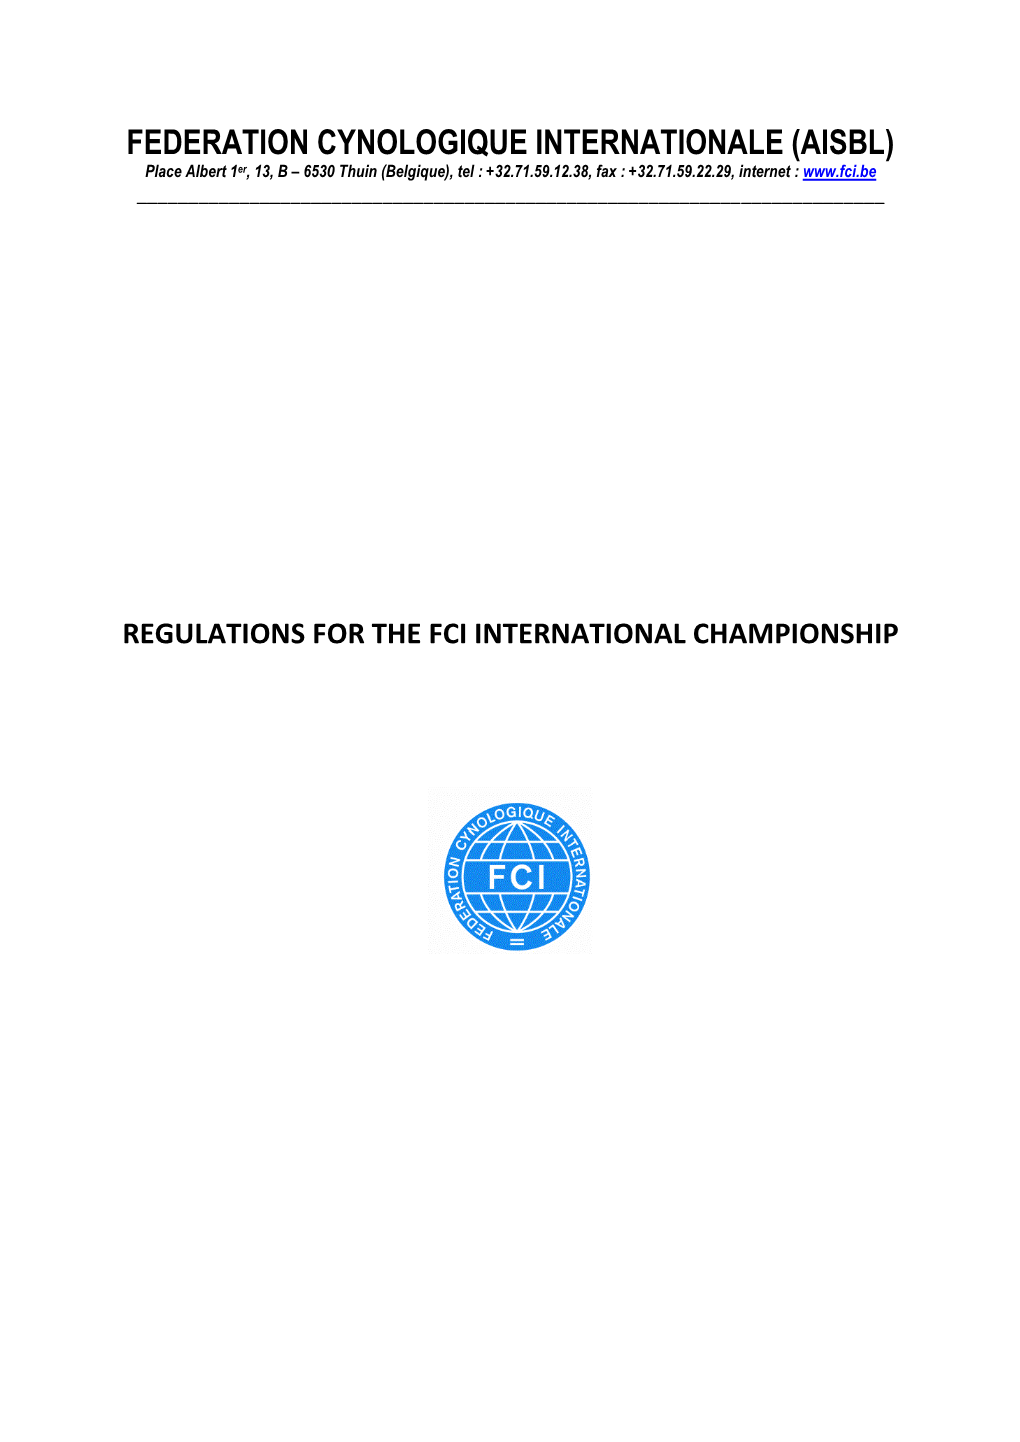 Federation Cynologique Internationale (Aisbl)